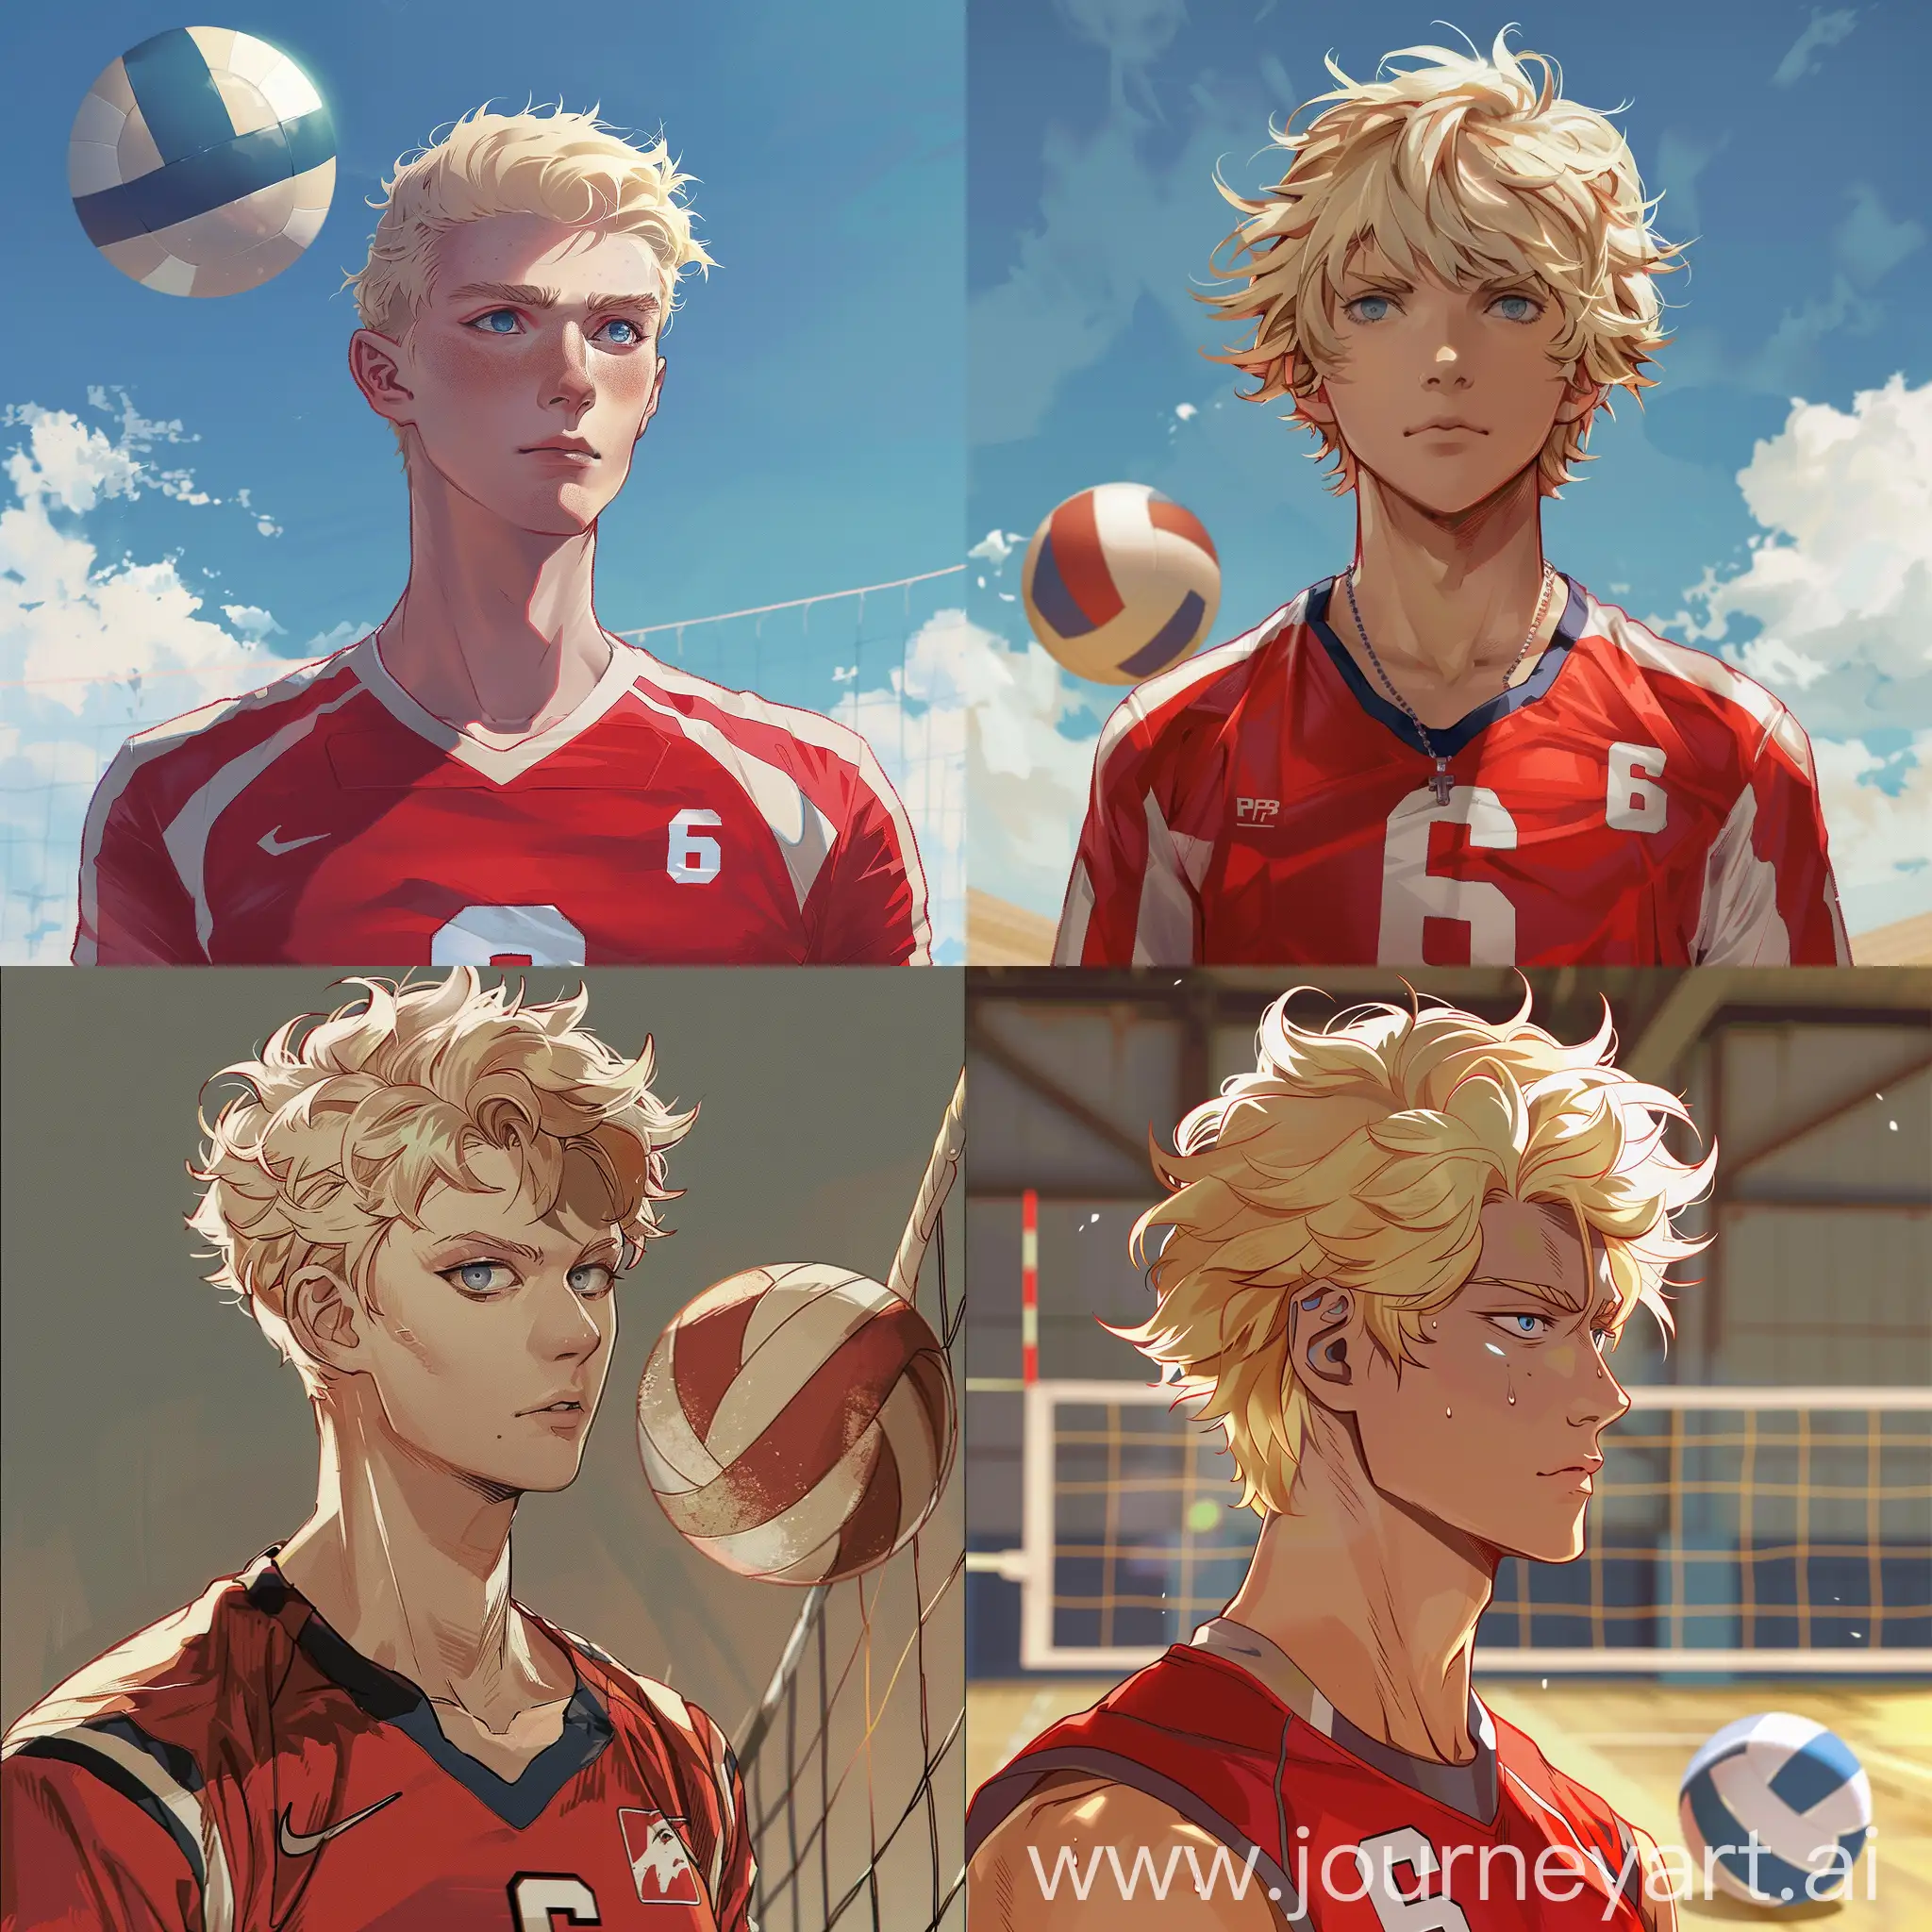 Towering-Blonde-Boy-with-Heterochromia-in-Volleyball-Uniform